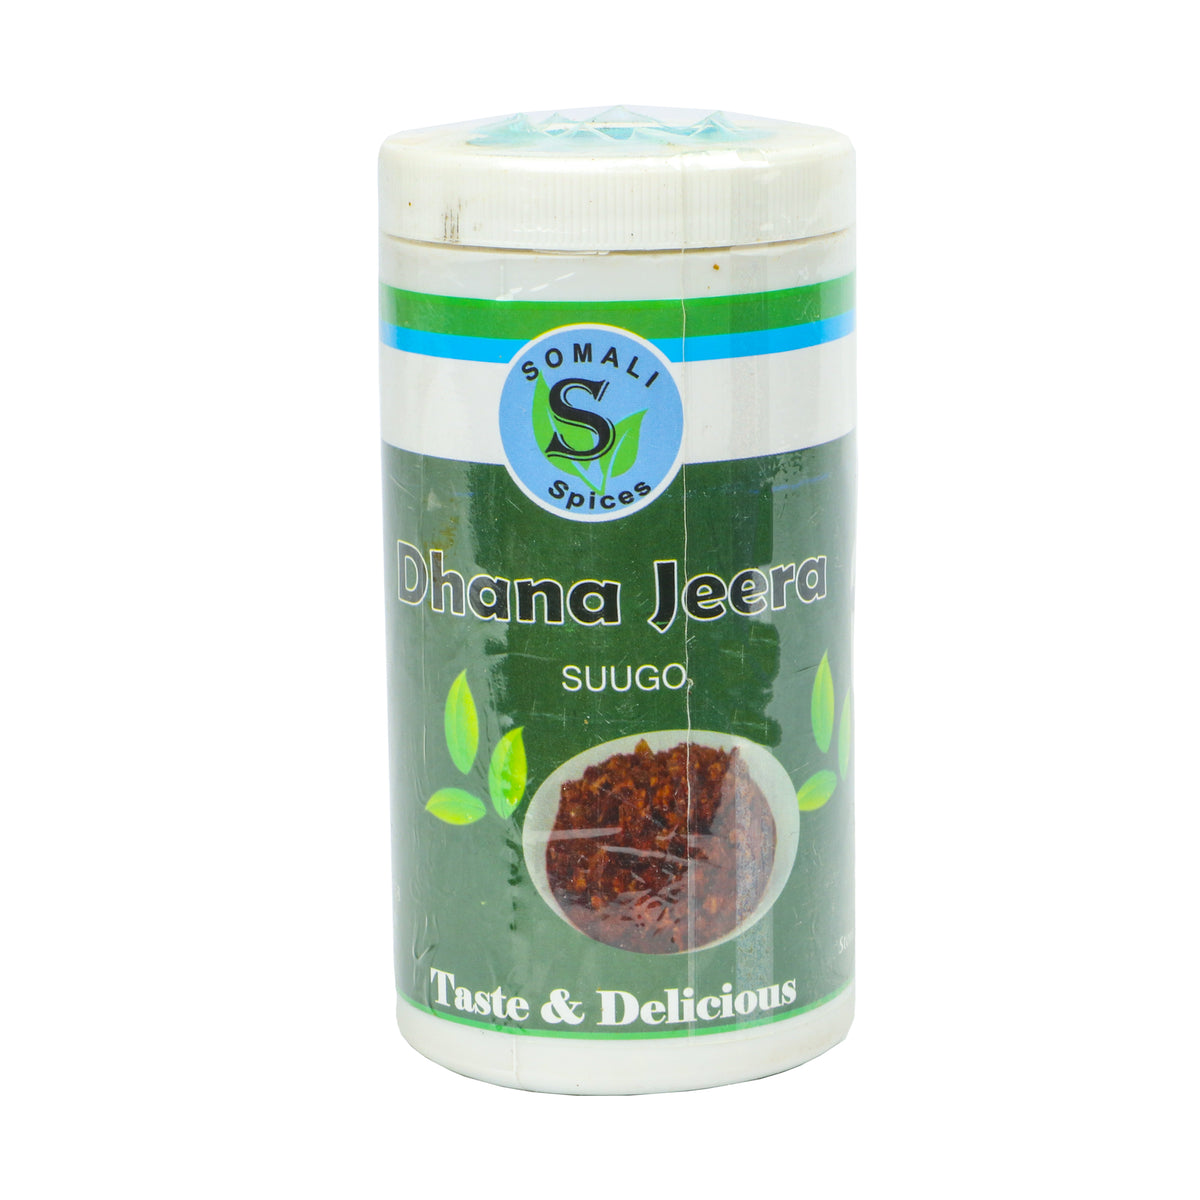 Somali Spices Dhana Jeera Suugo